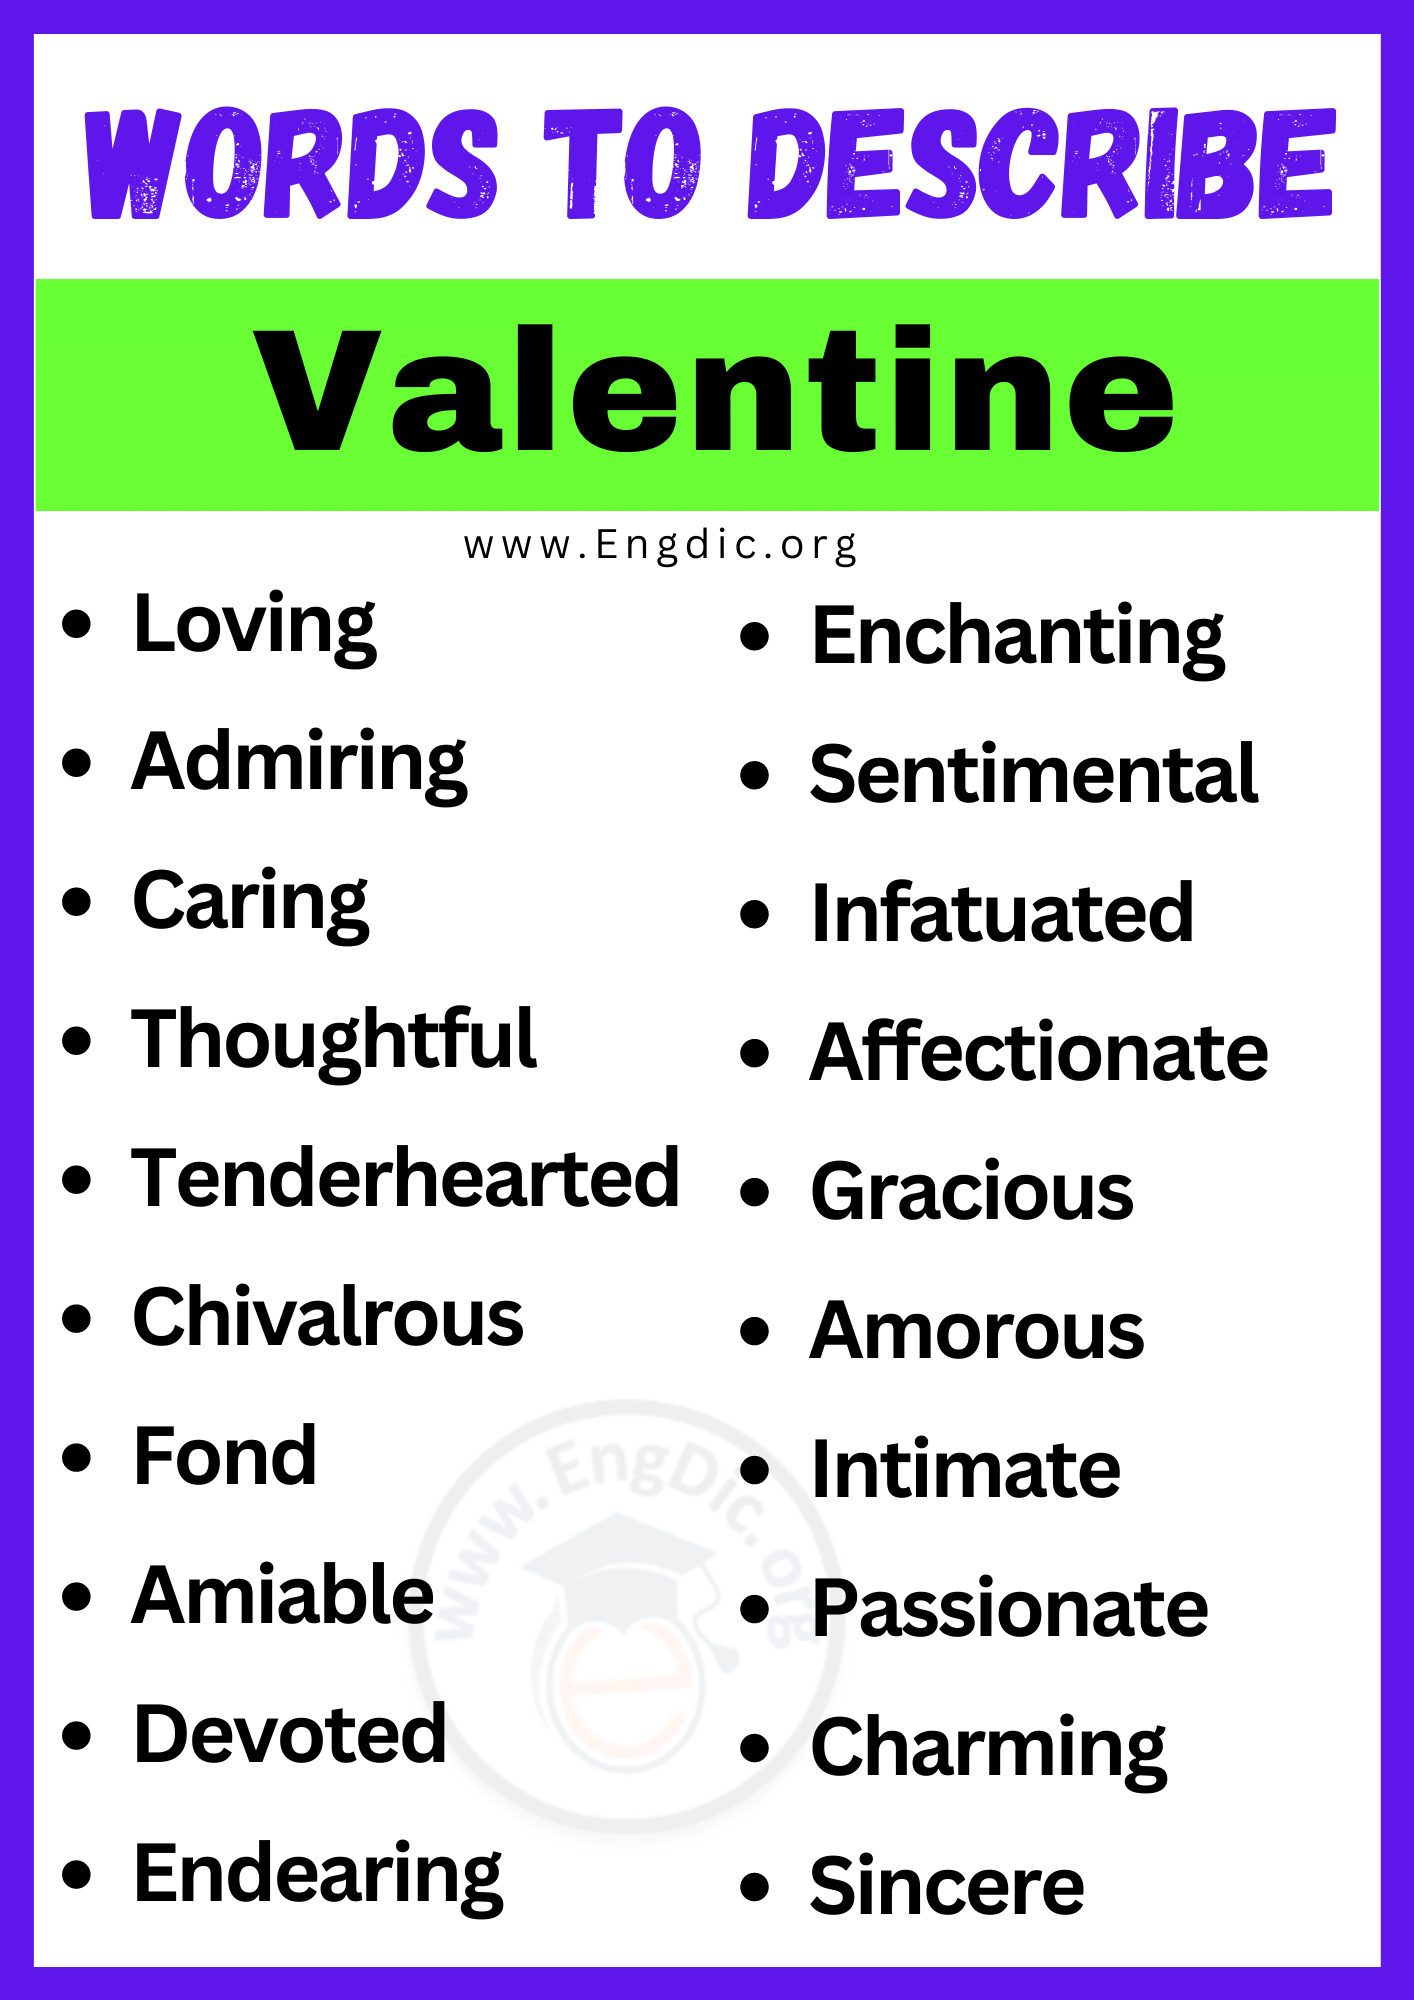 Words to Describe Valentine